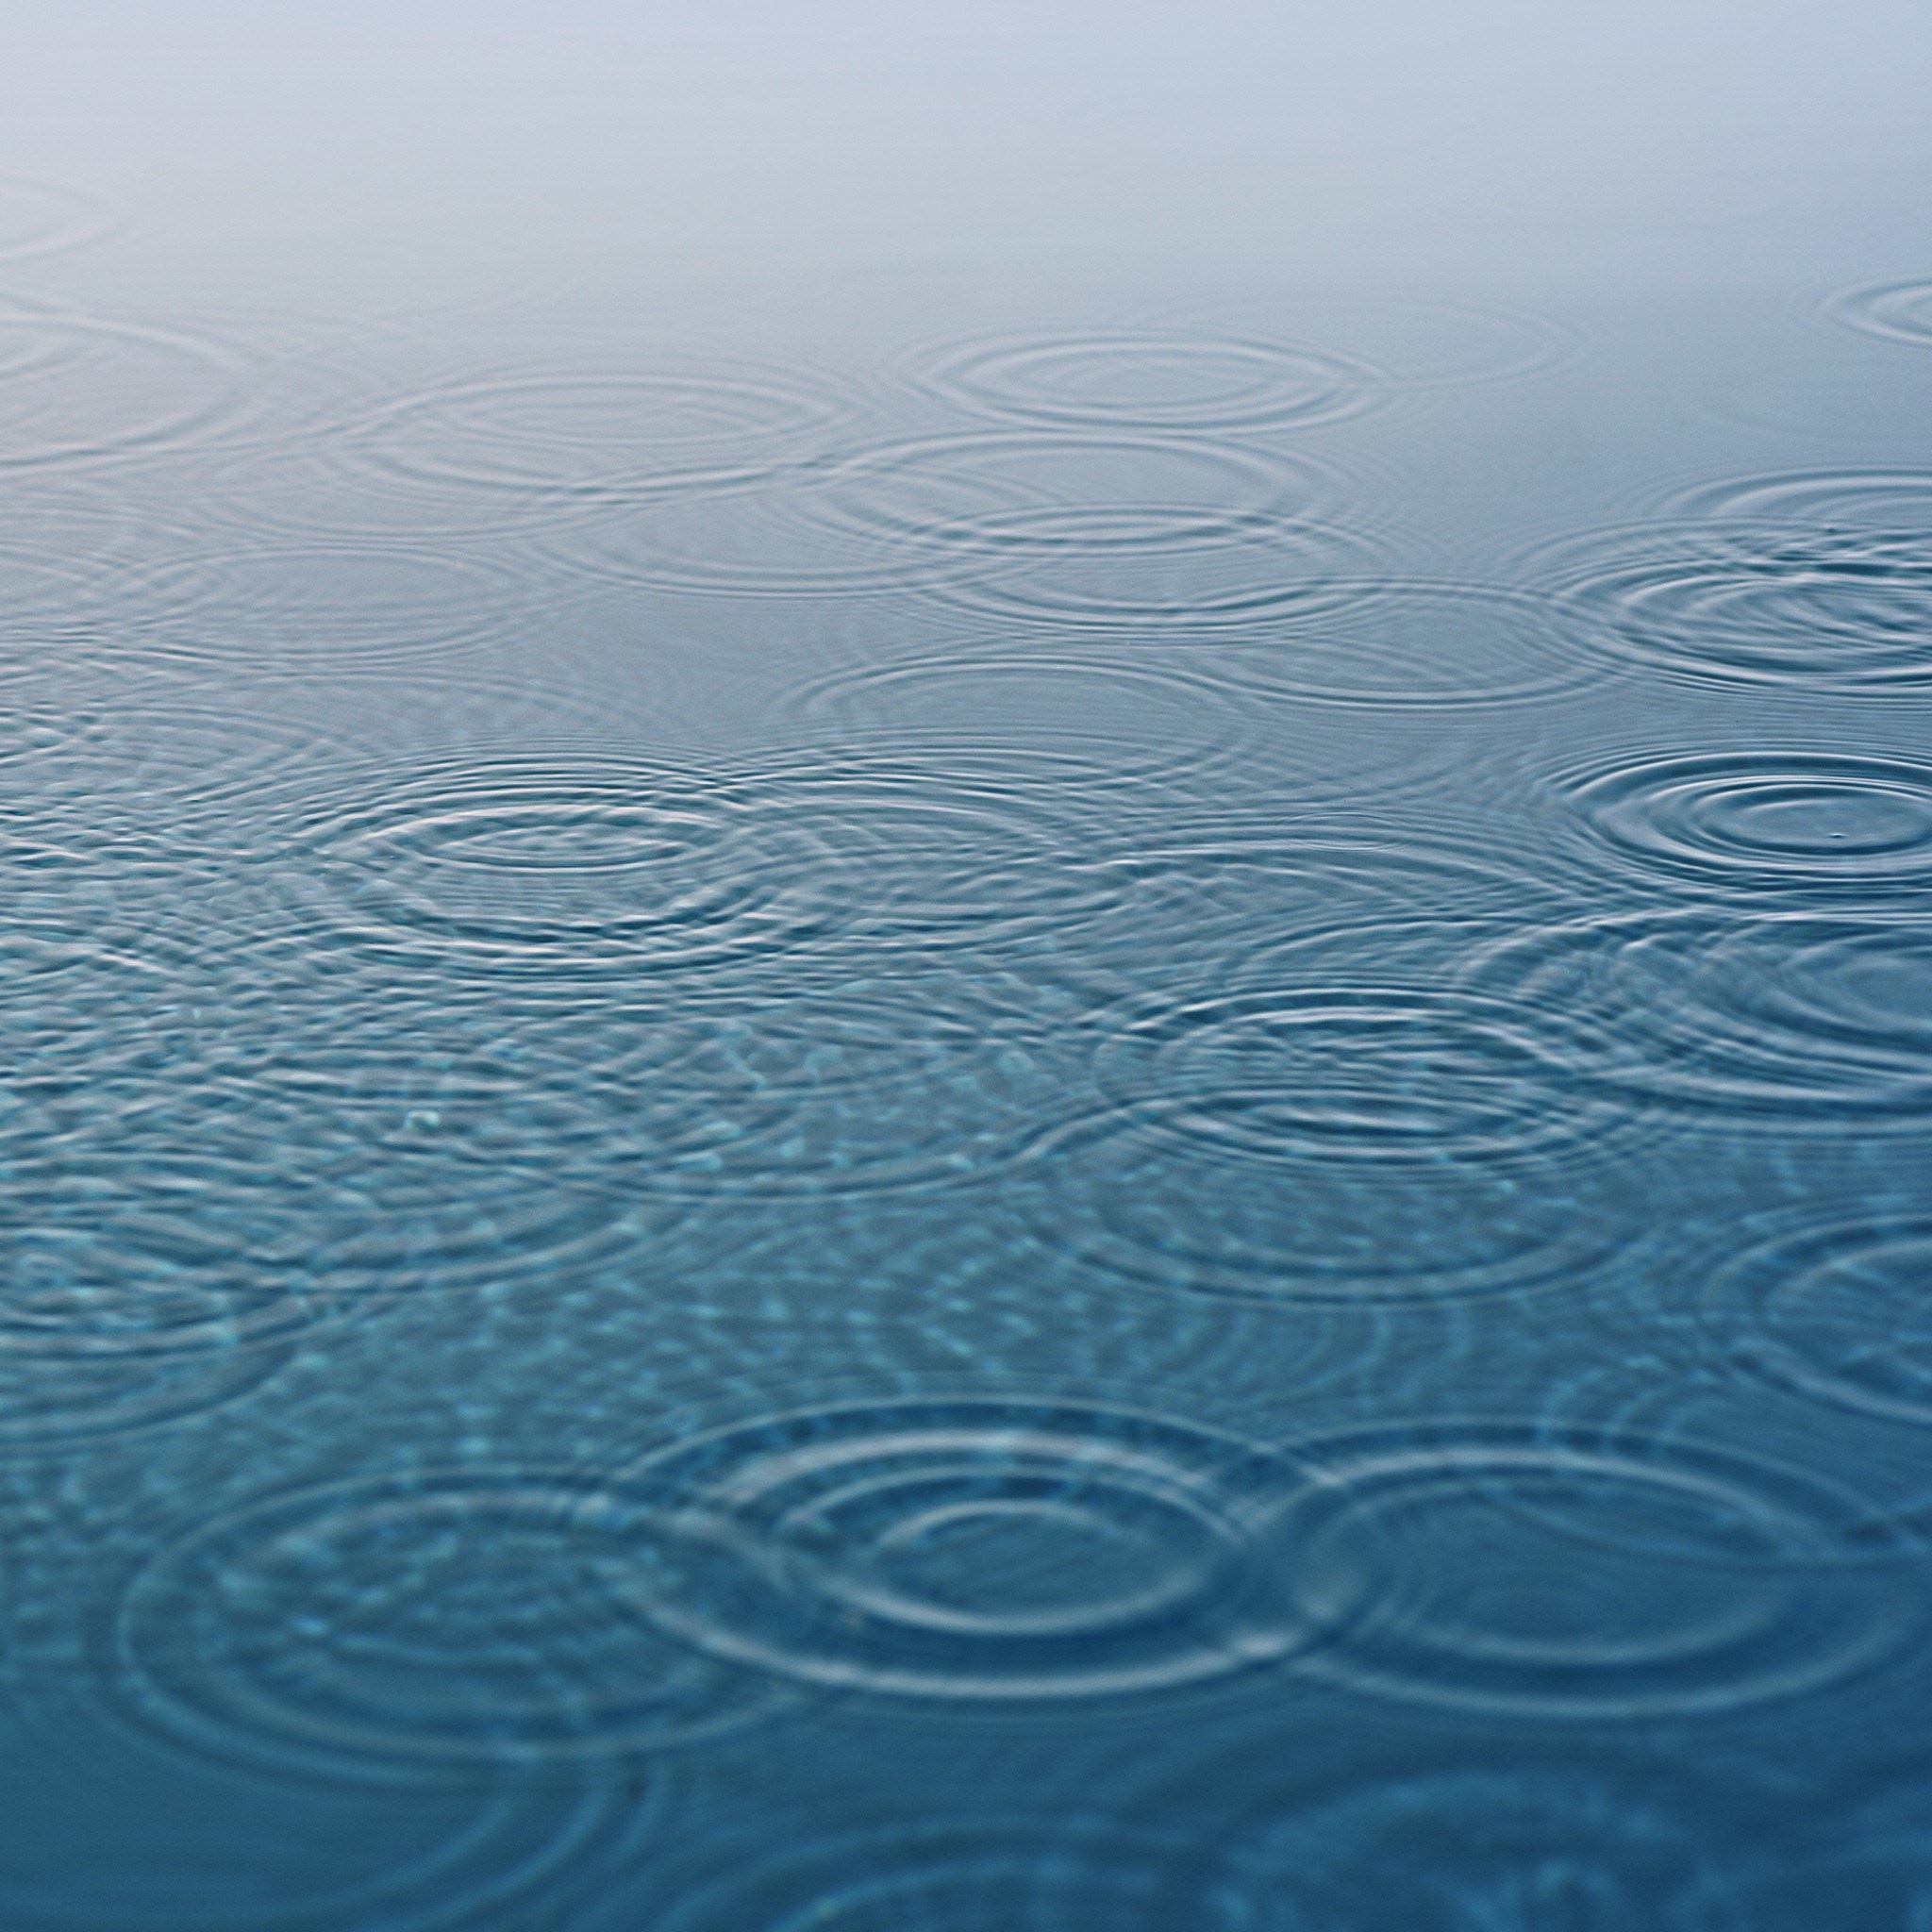 Rainy Wet Ripple Lake Surface iPad Air wallpaper 